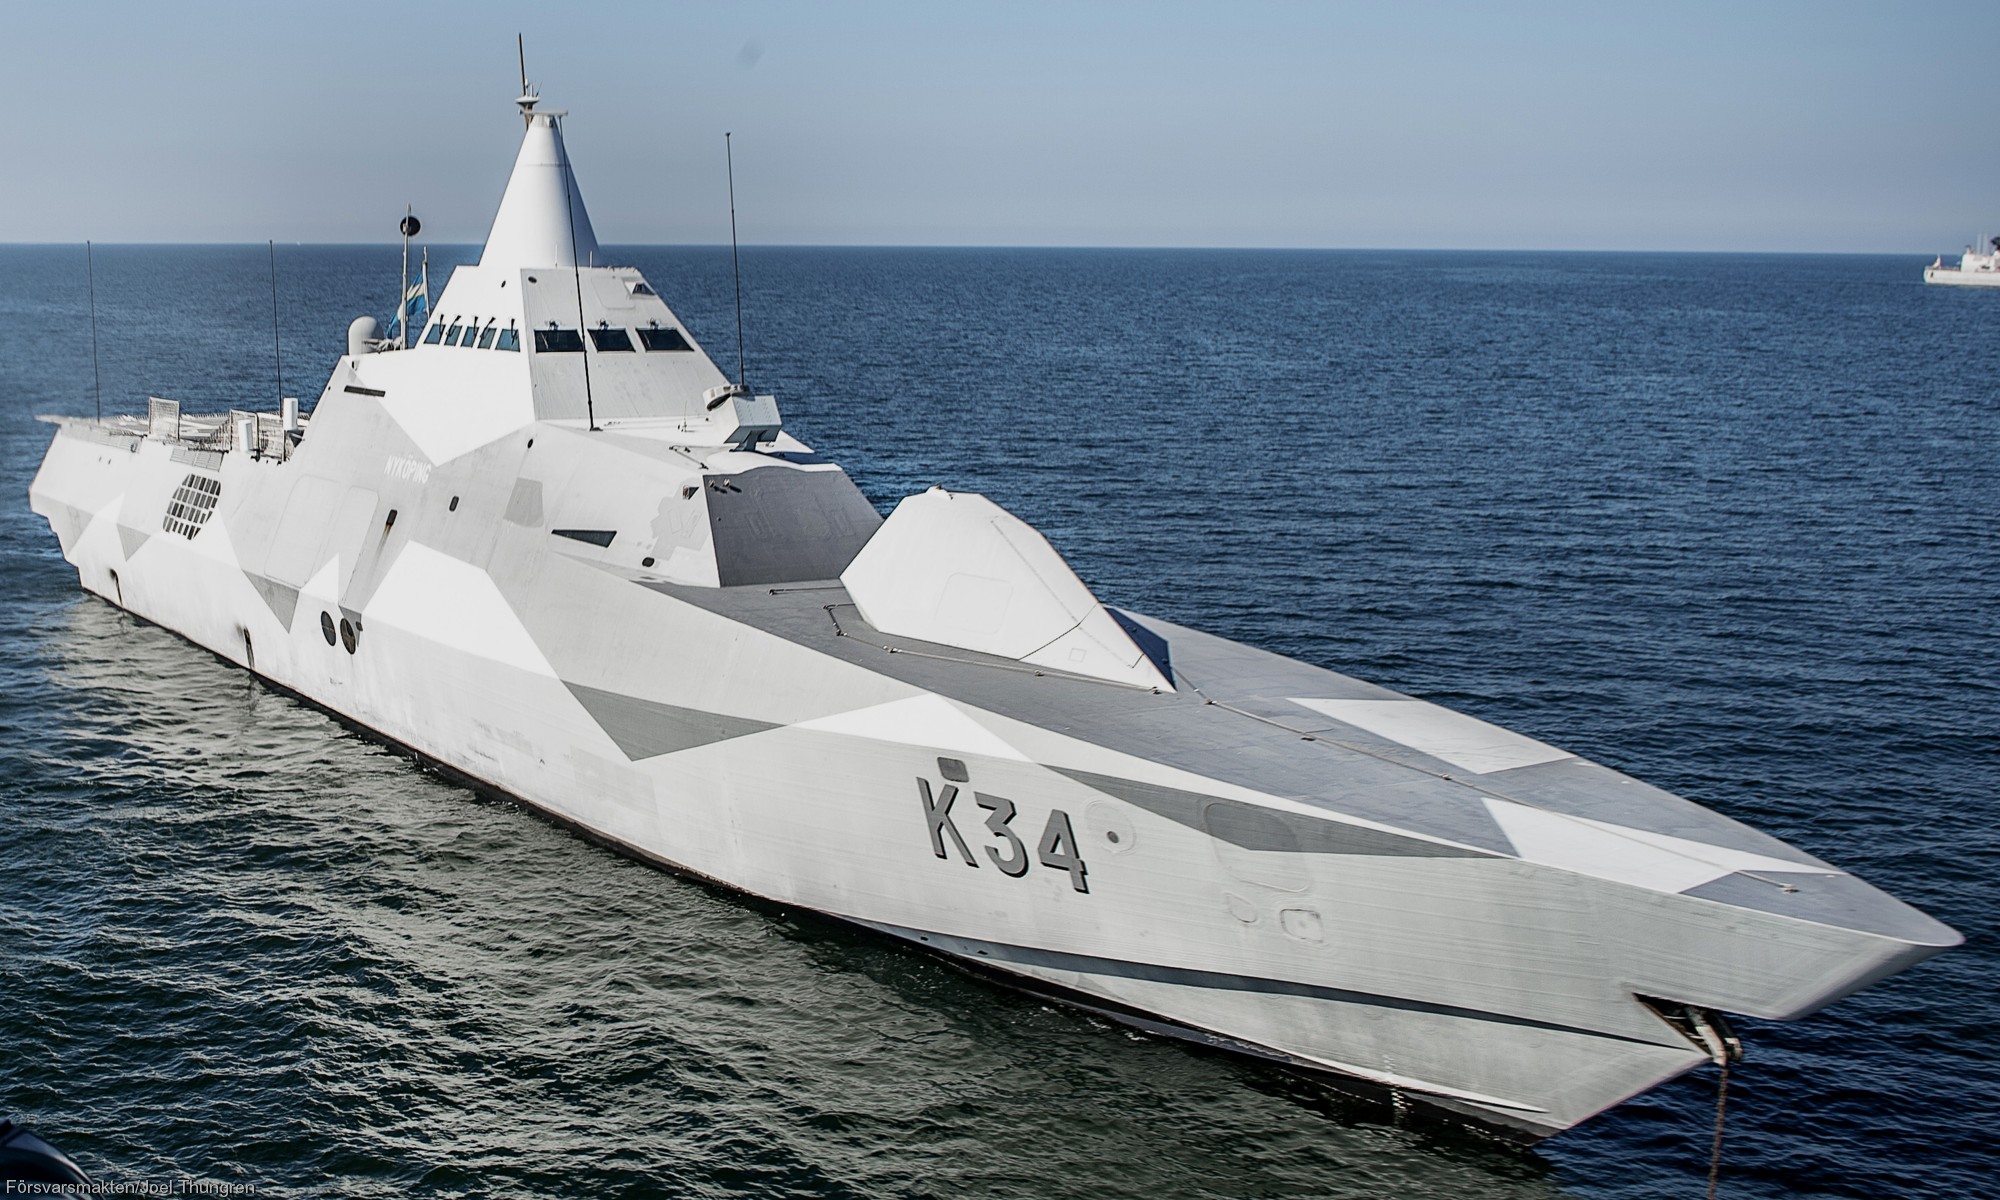 k34 hswms hms nykoping visby class corvette royal swedish navy svenska marinen 06